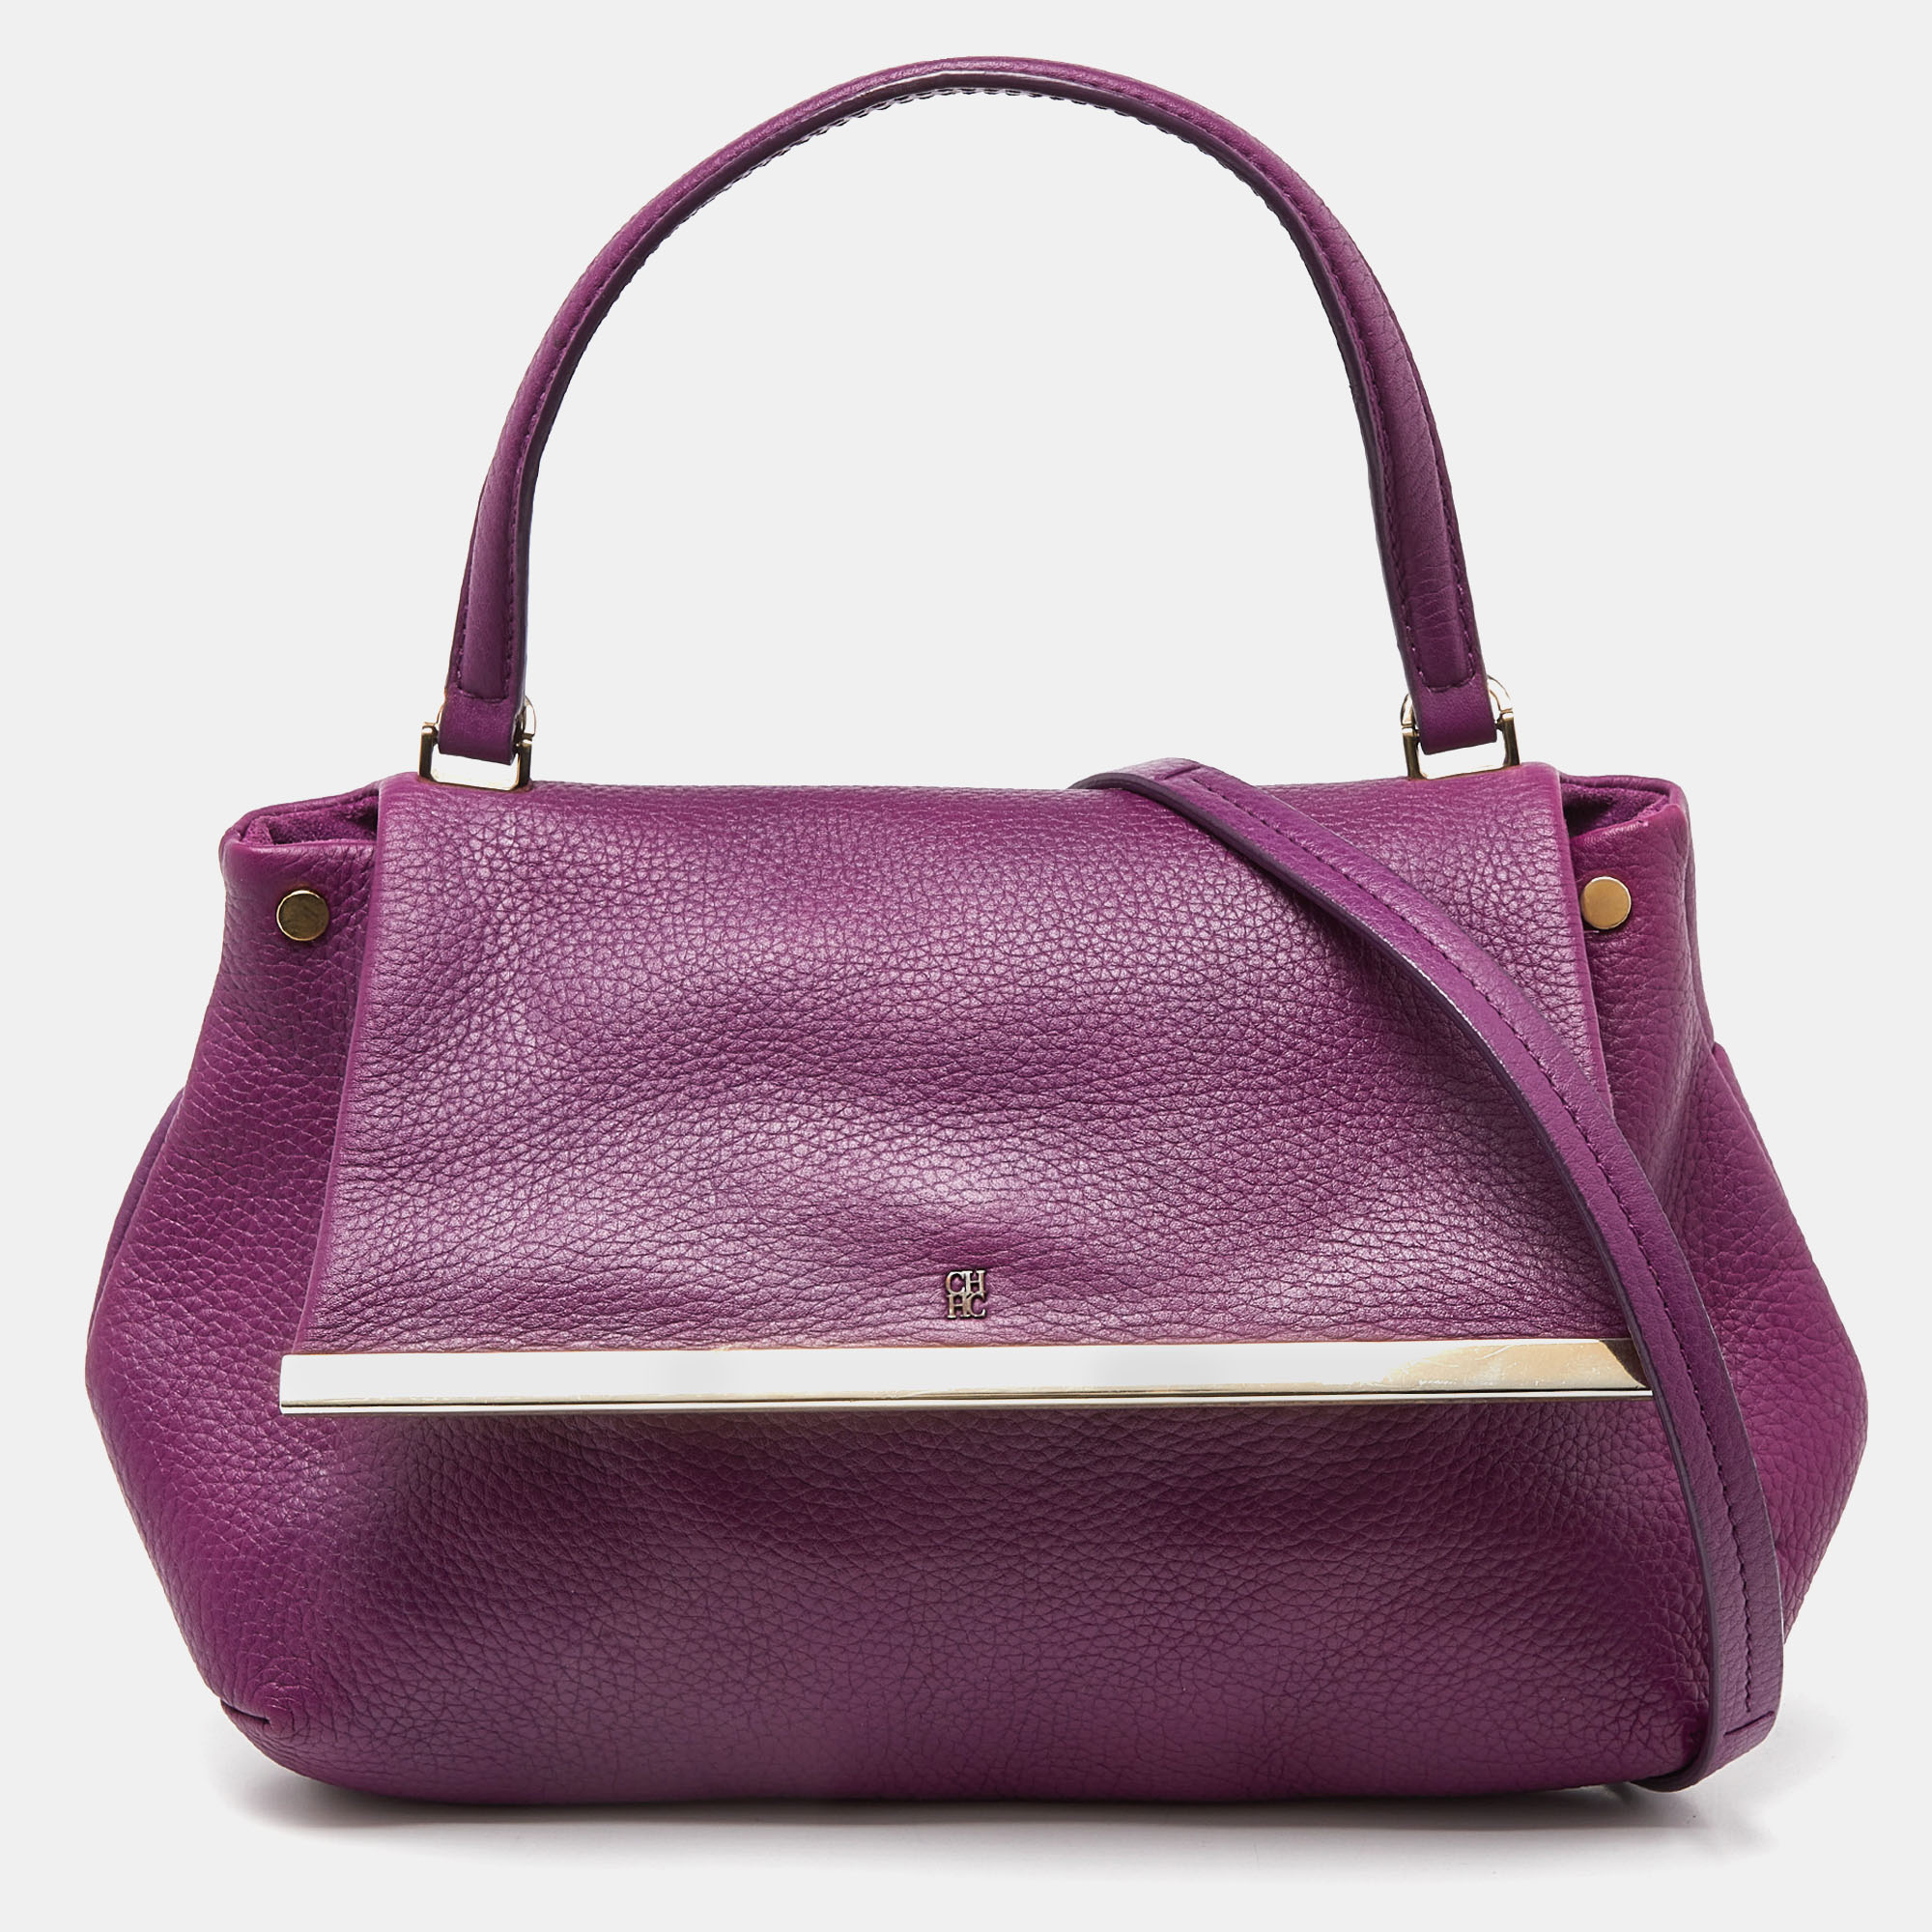 Ch carolina herrera purple leather top handle bag